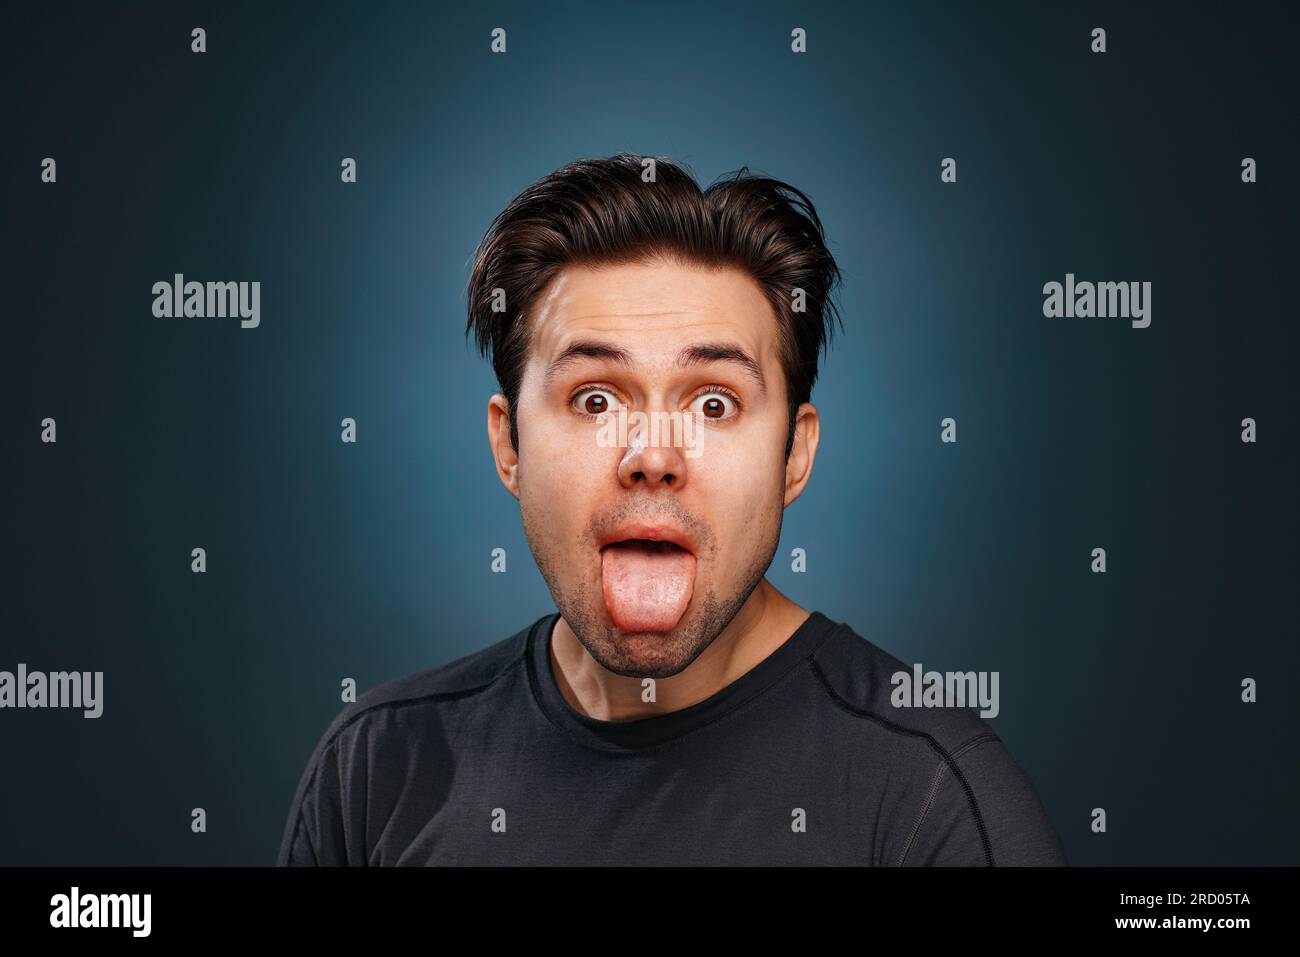 Young brunette man showing tongue emotional portrait Stock Photo